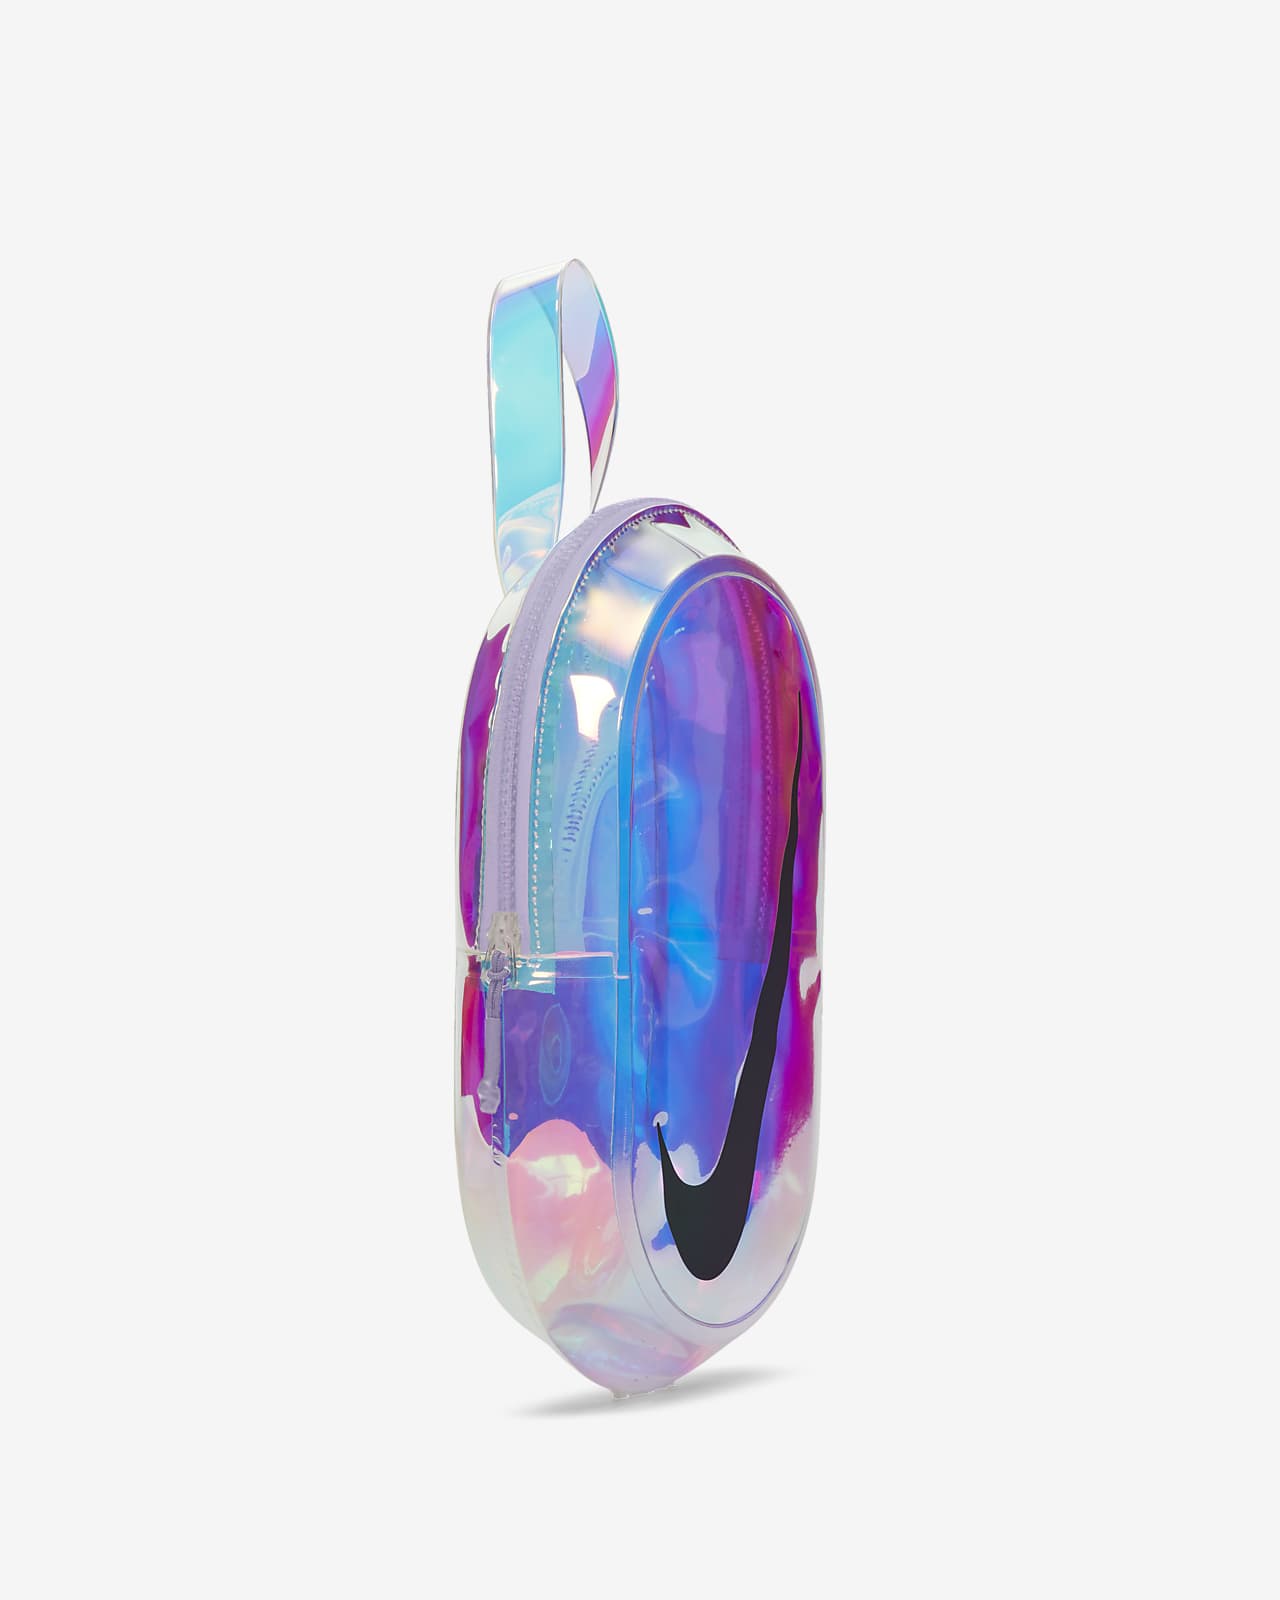 Bolsa de natación iridiscente Nike Locker